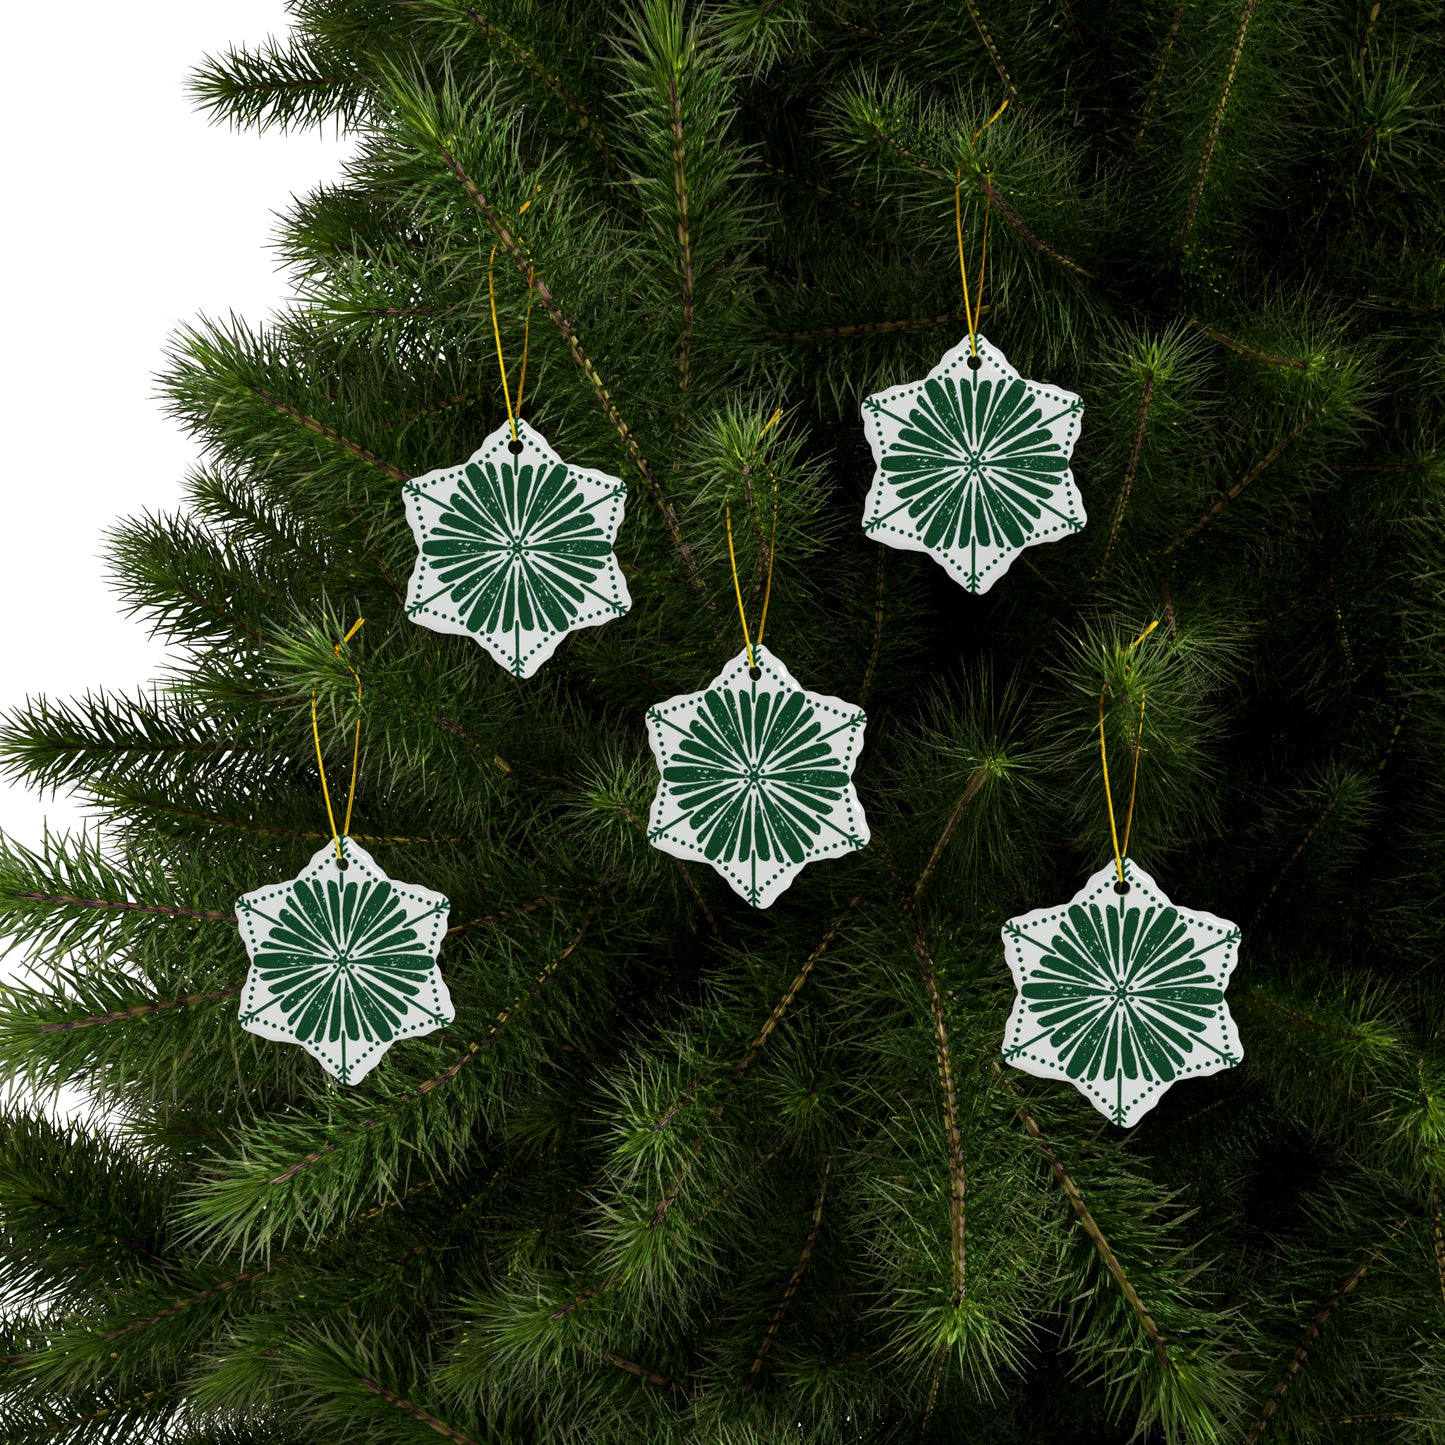 Daisy2 Scandinavian Christmas Ceramic Ornaments (1pc, 3pcs, 5pcs, 10pcs)